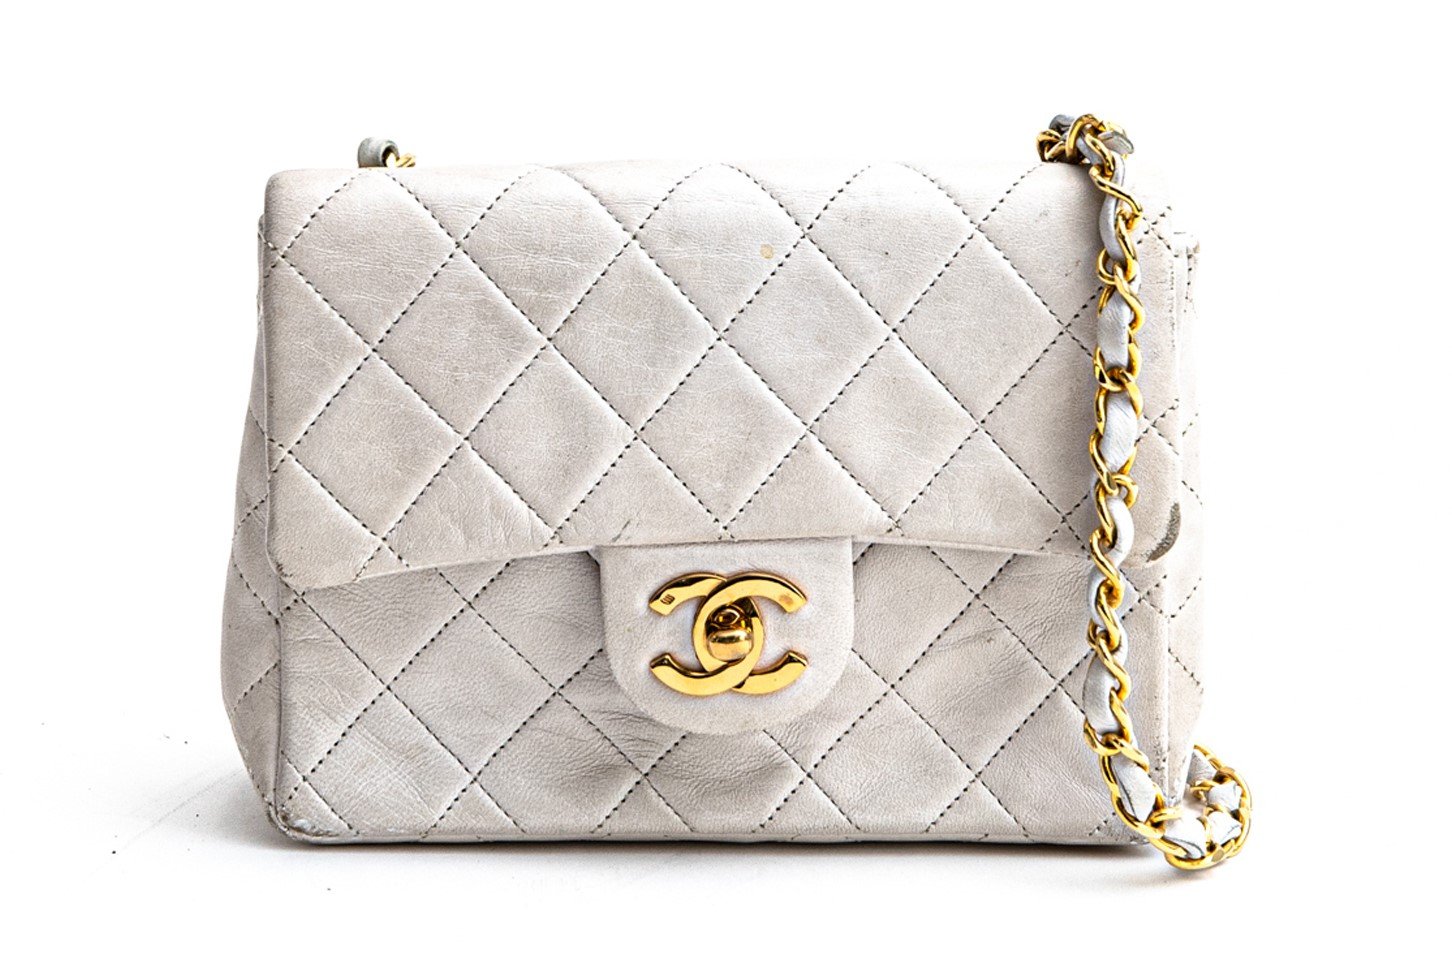 Chanel Handbag Cleaning, Repair & Restoration